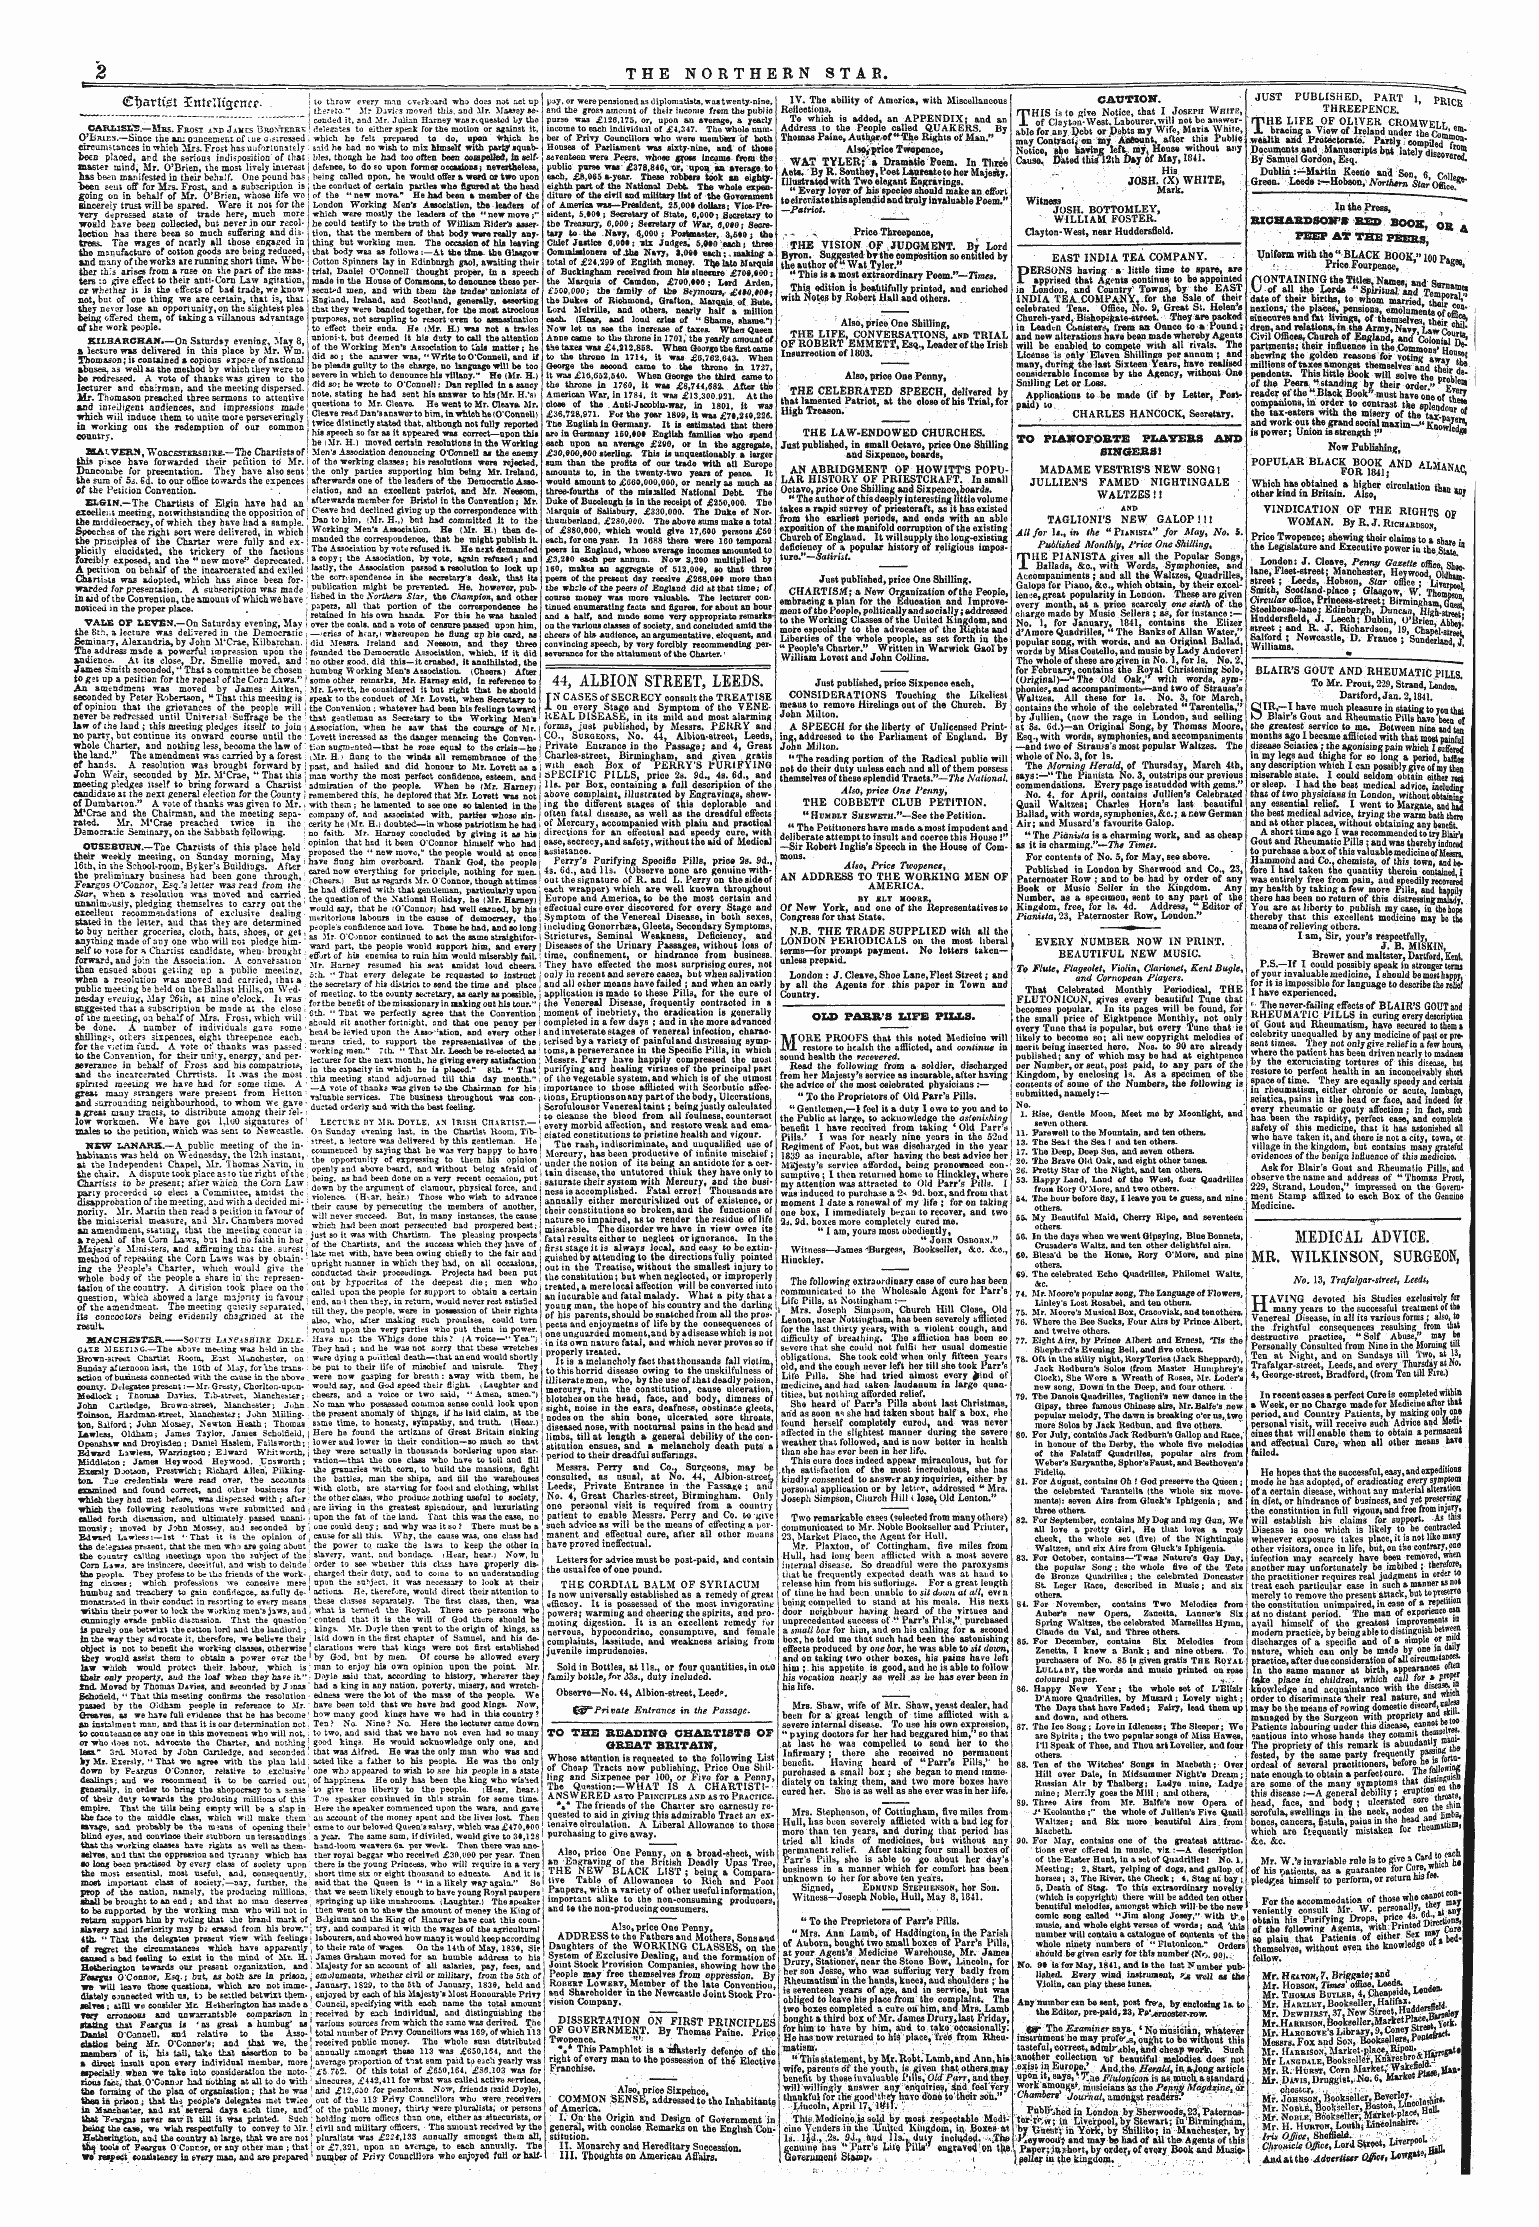 Northern Star (1837-1852): jS F Y, 2nd edition - 44. Alrtotv Street. Leeds. «¦